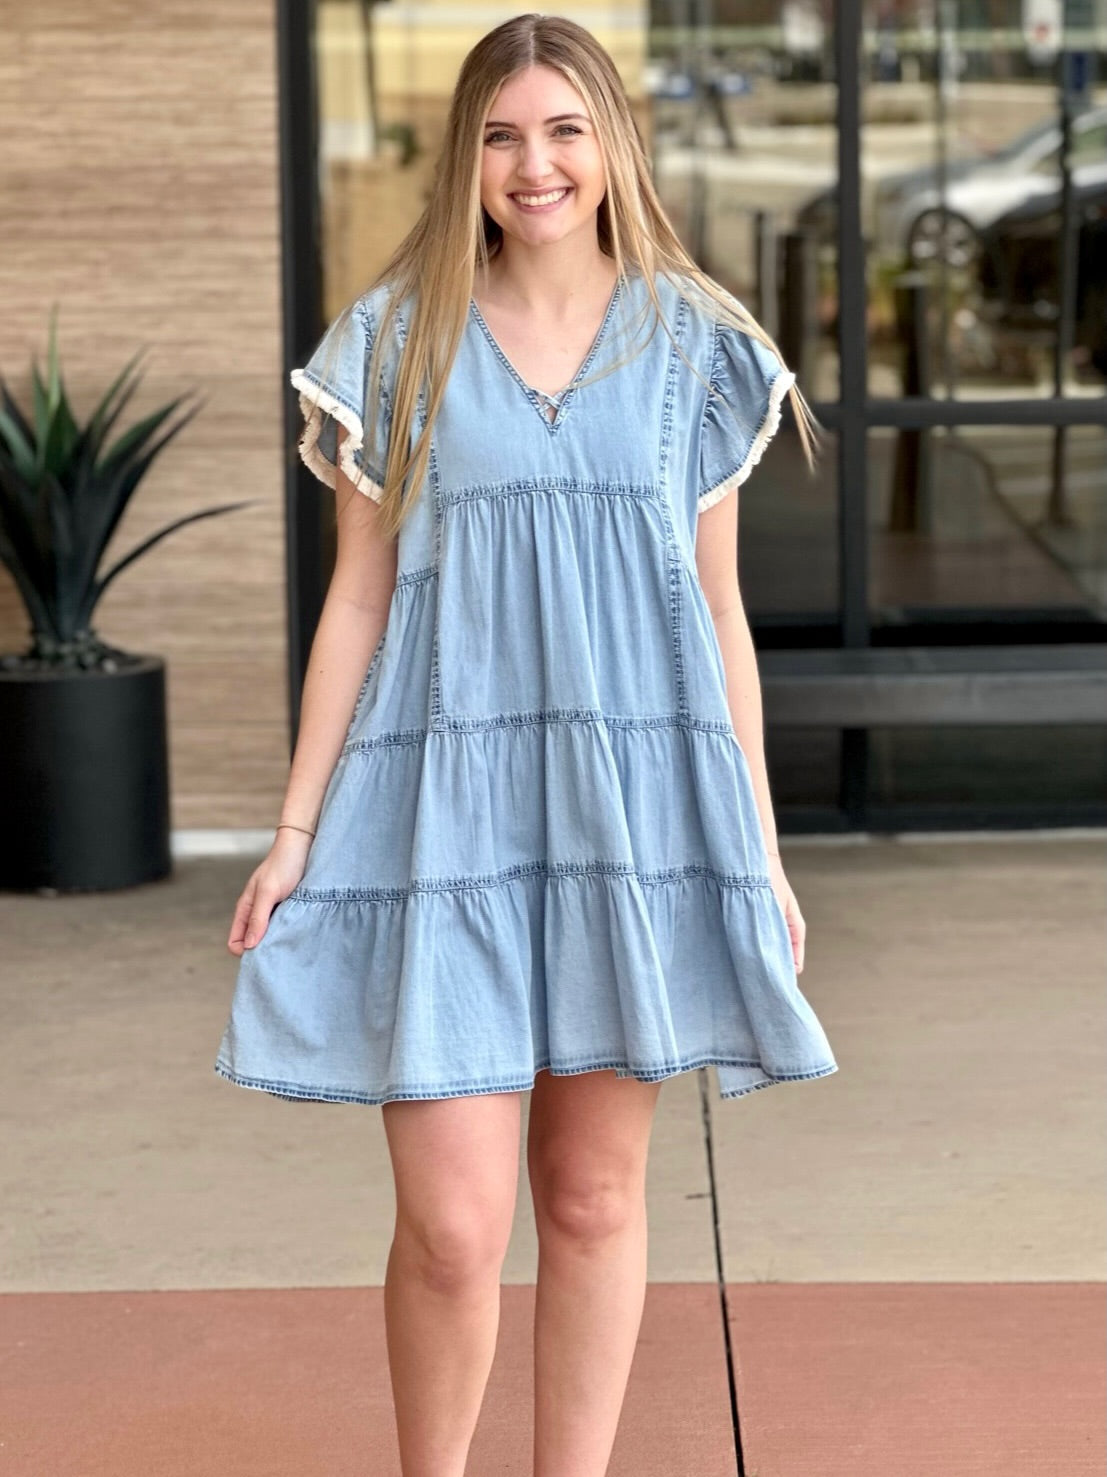 Lexi in denim blue dress holding dress